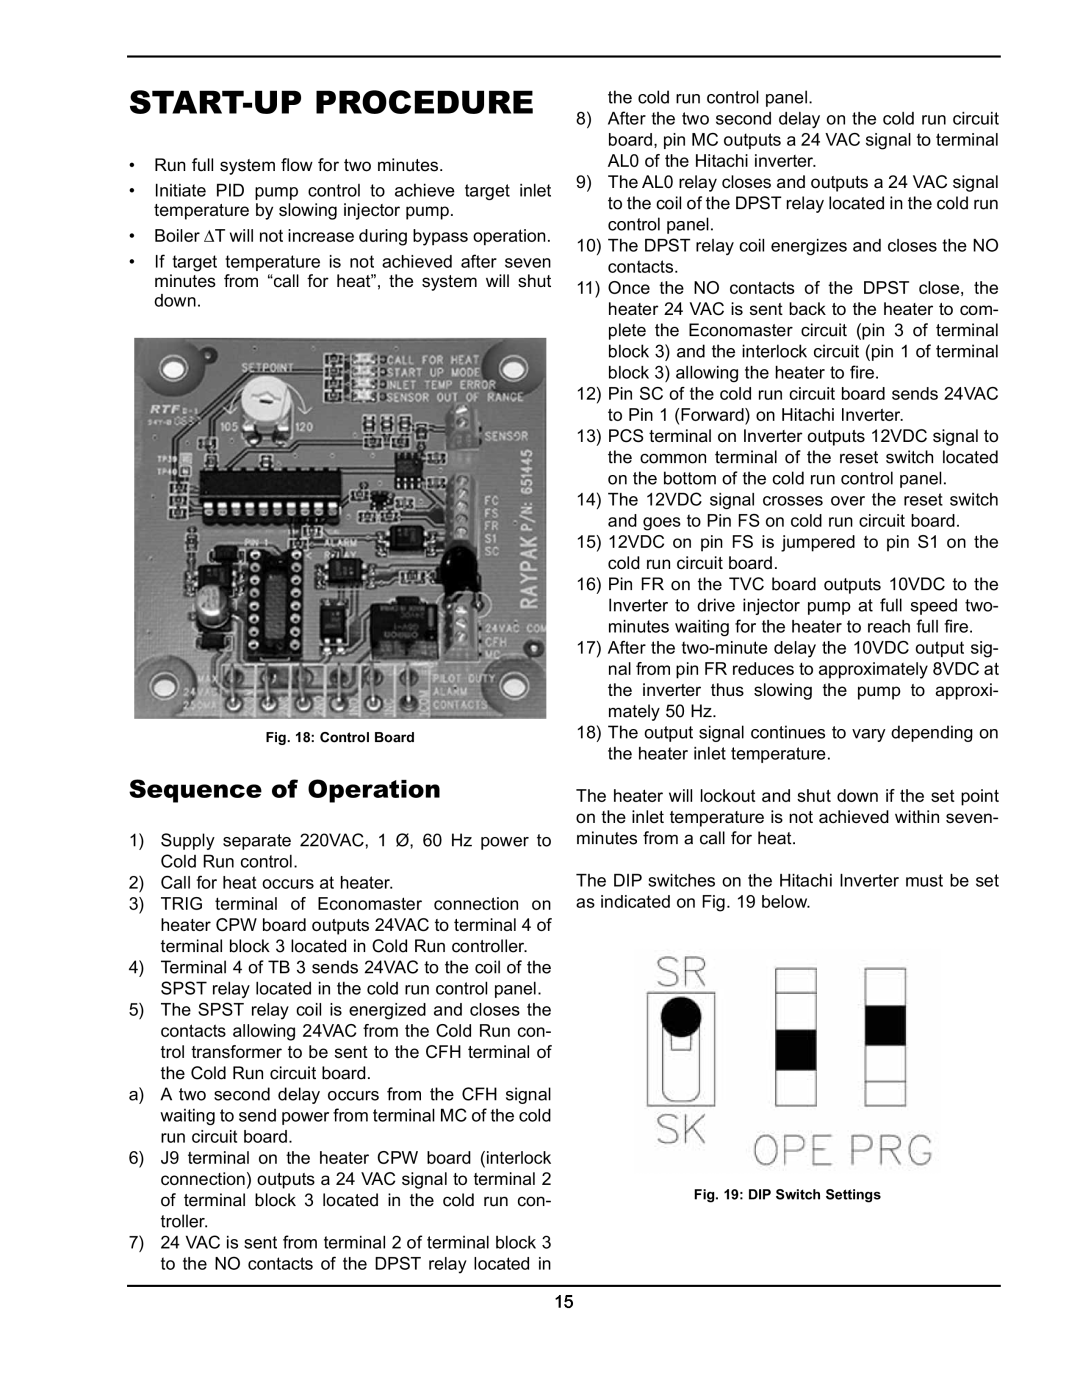 Raypak 241275 manual Start-Upprocedure, Sequence of Operation 